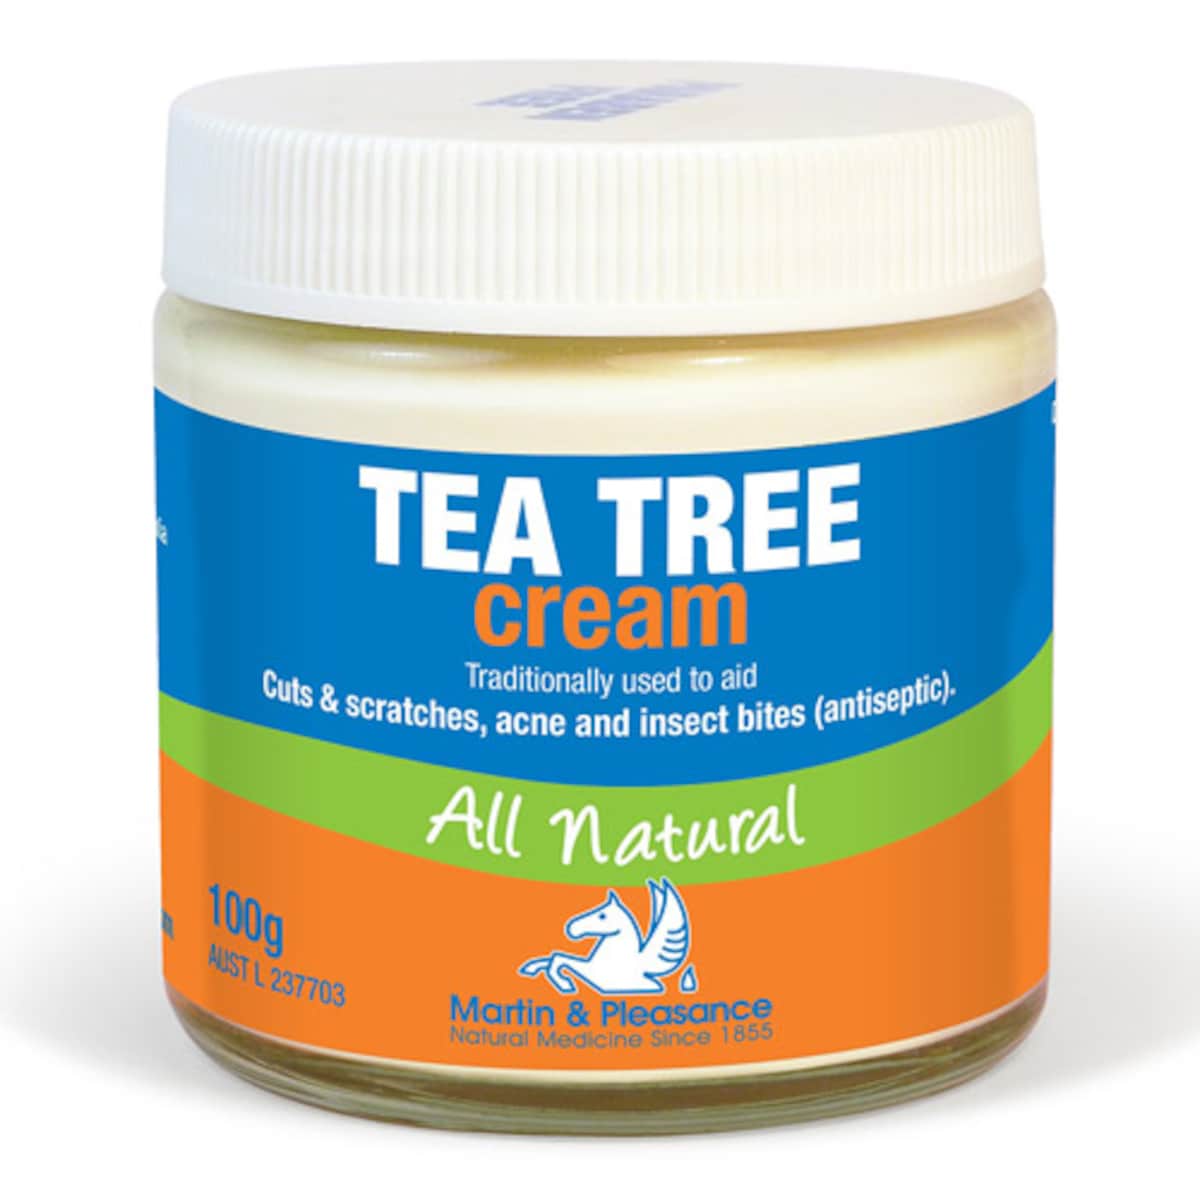 Martin & Pleasance Natural Tea Tree Cream 100g